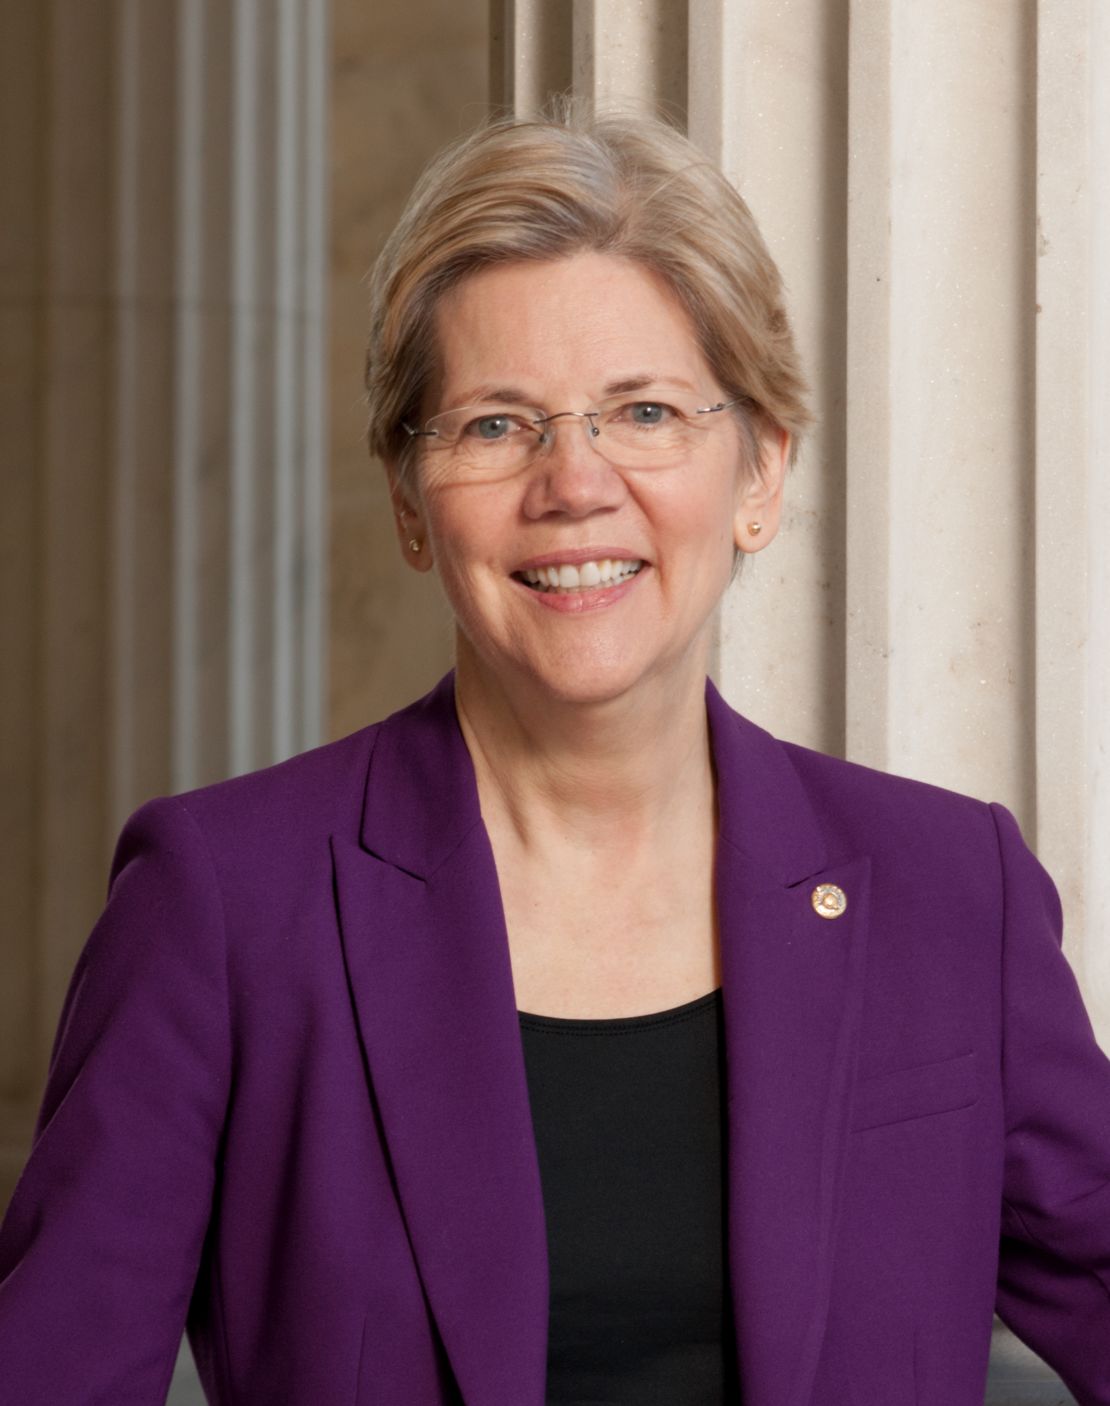 Sen. Elizabeth Warren has stressed the inequality issue, Julian Zelizer notes.